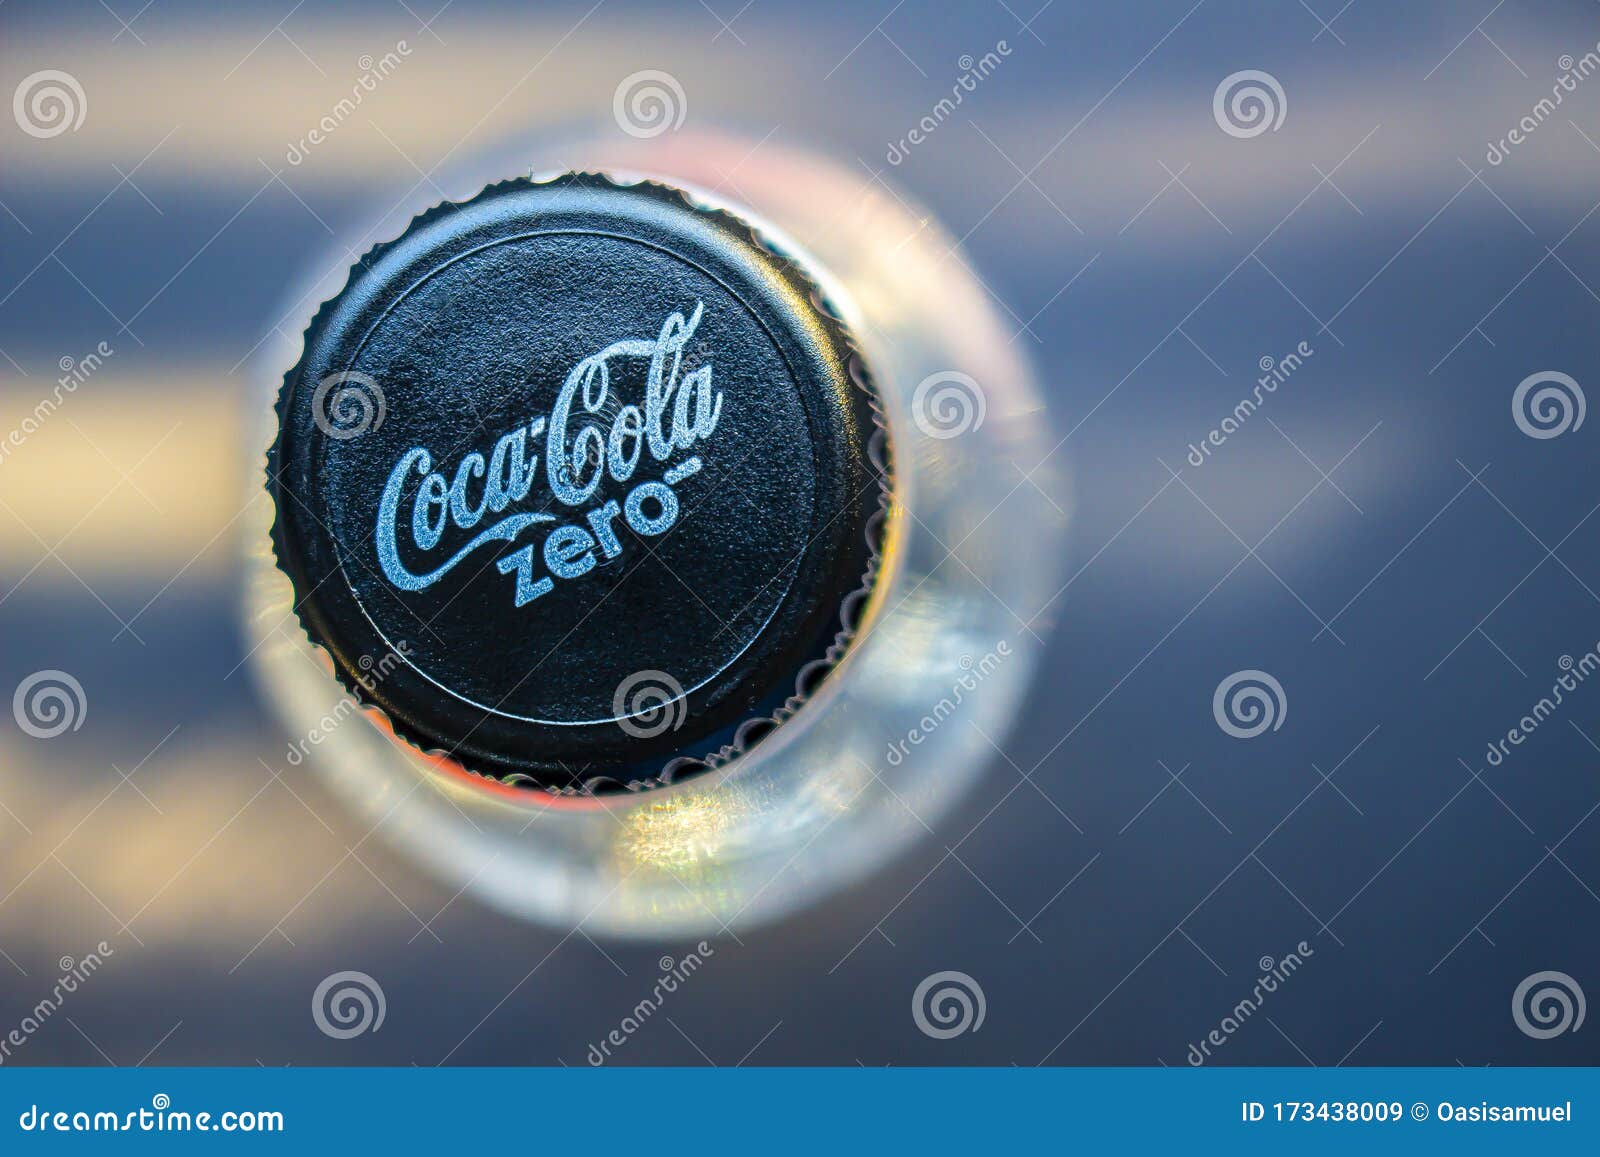 Top View Of A Empty Coca Cola Zero Plastic Bottle Editorial Stock Image Image of caffeine